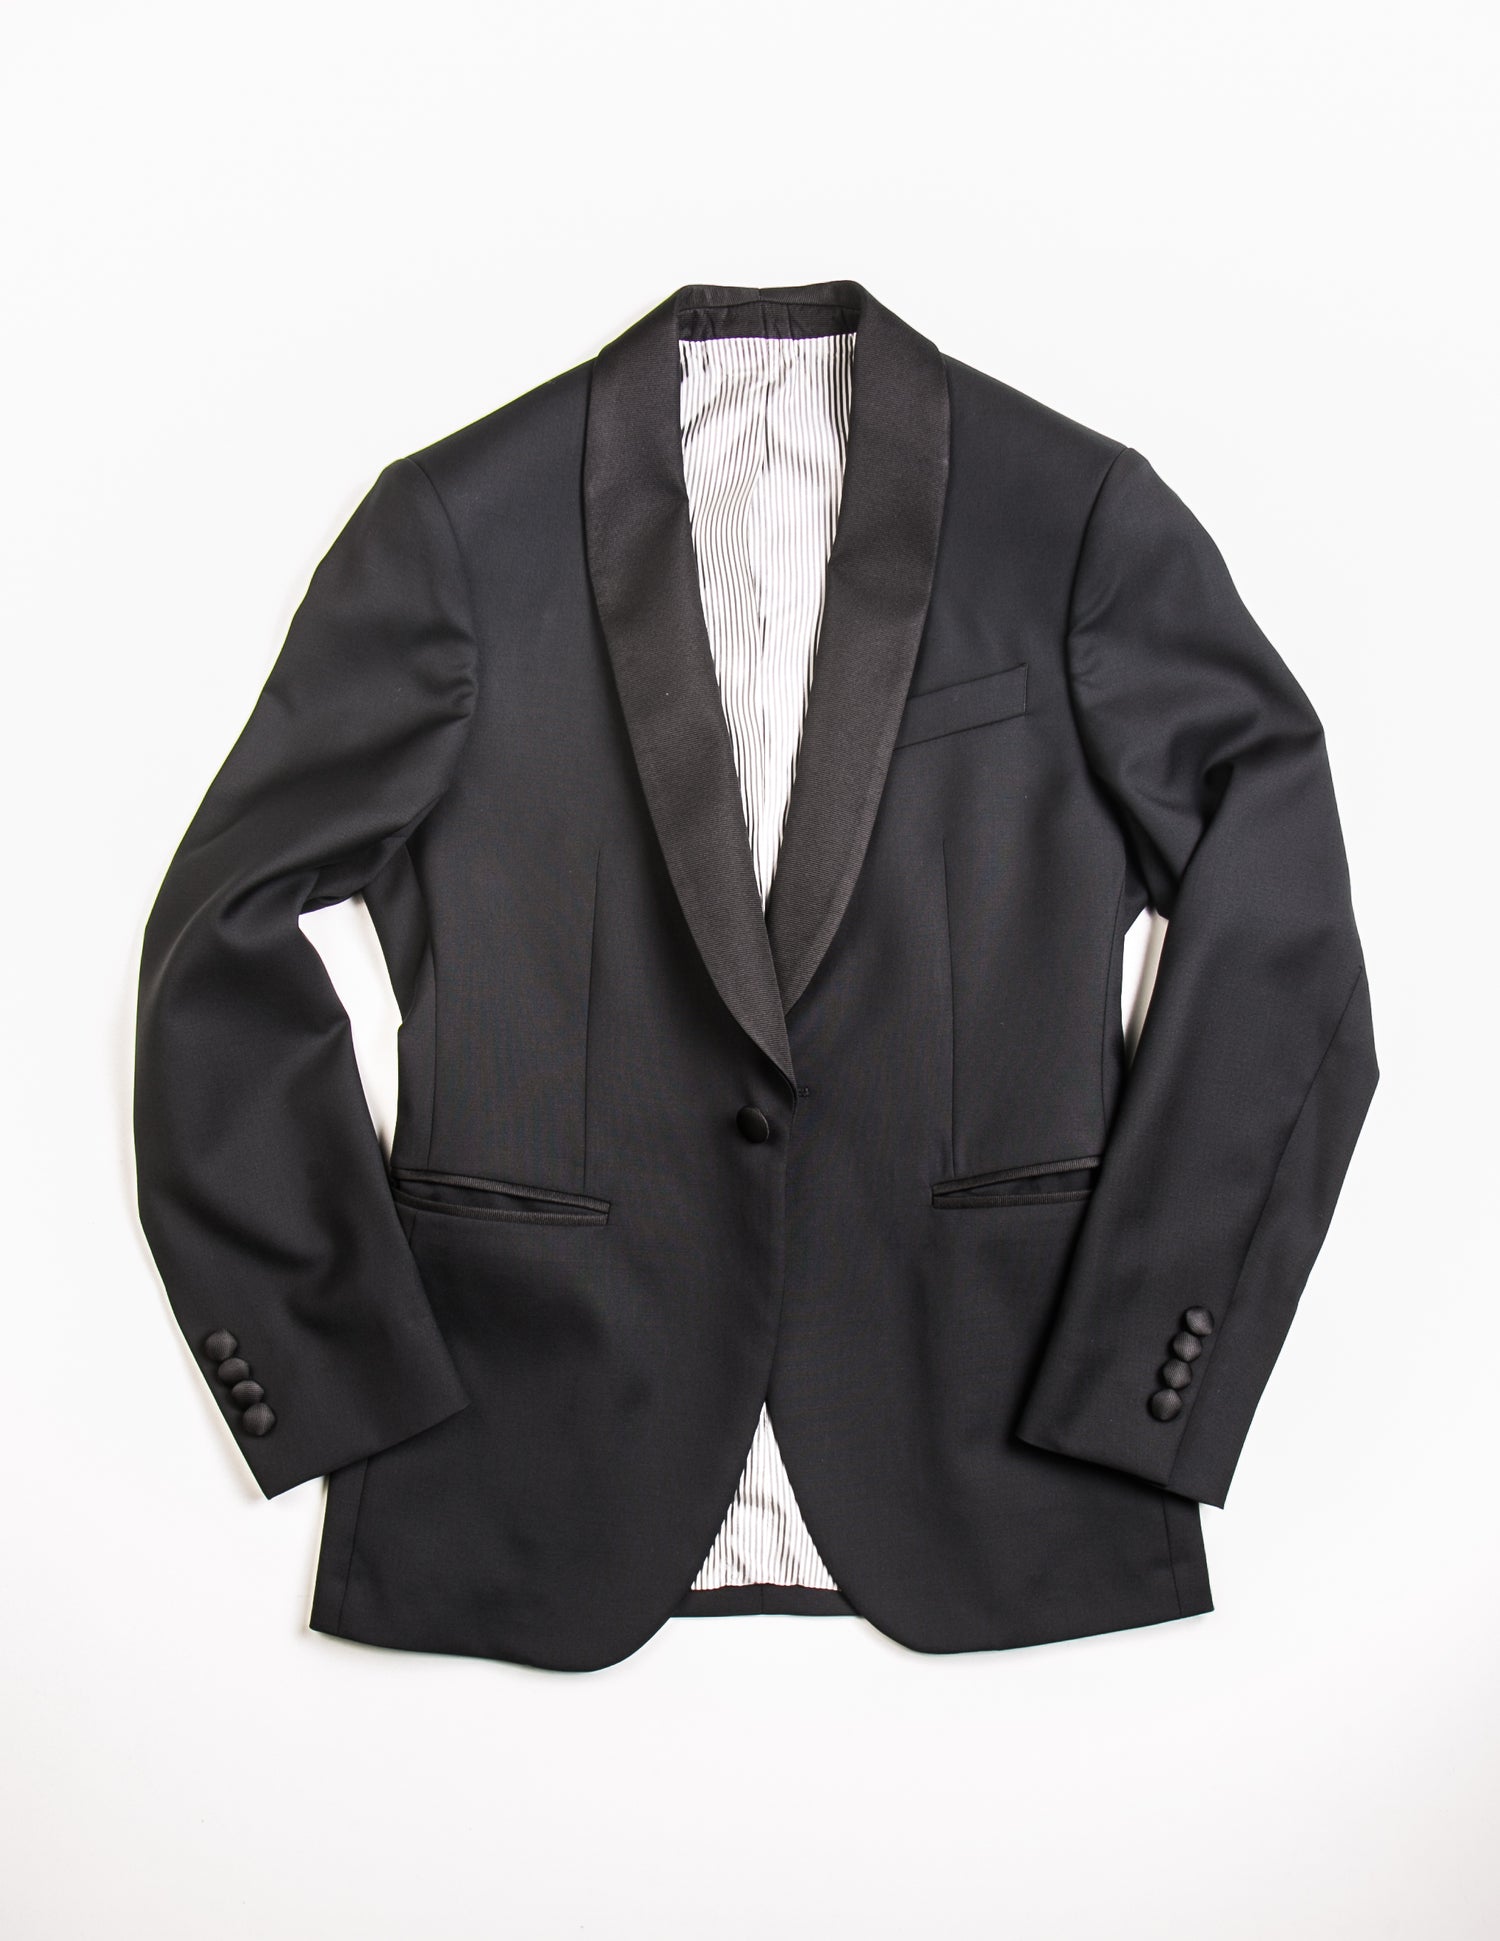 Brooklyn Tailors BKT50 Shawl Collar Tuxedo Jacket in Super 110s - Black with Grosgrain Lapel full length flat shot